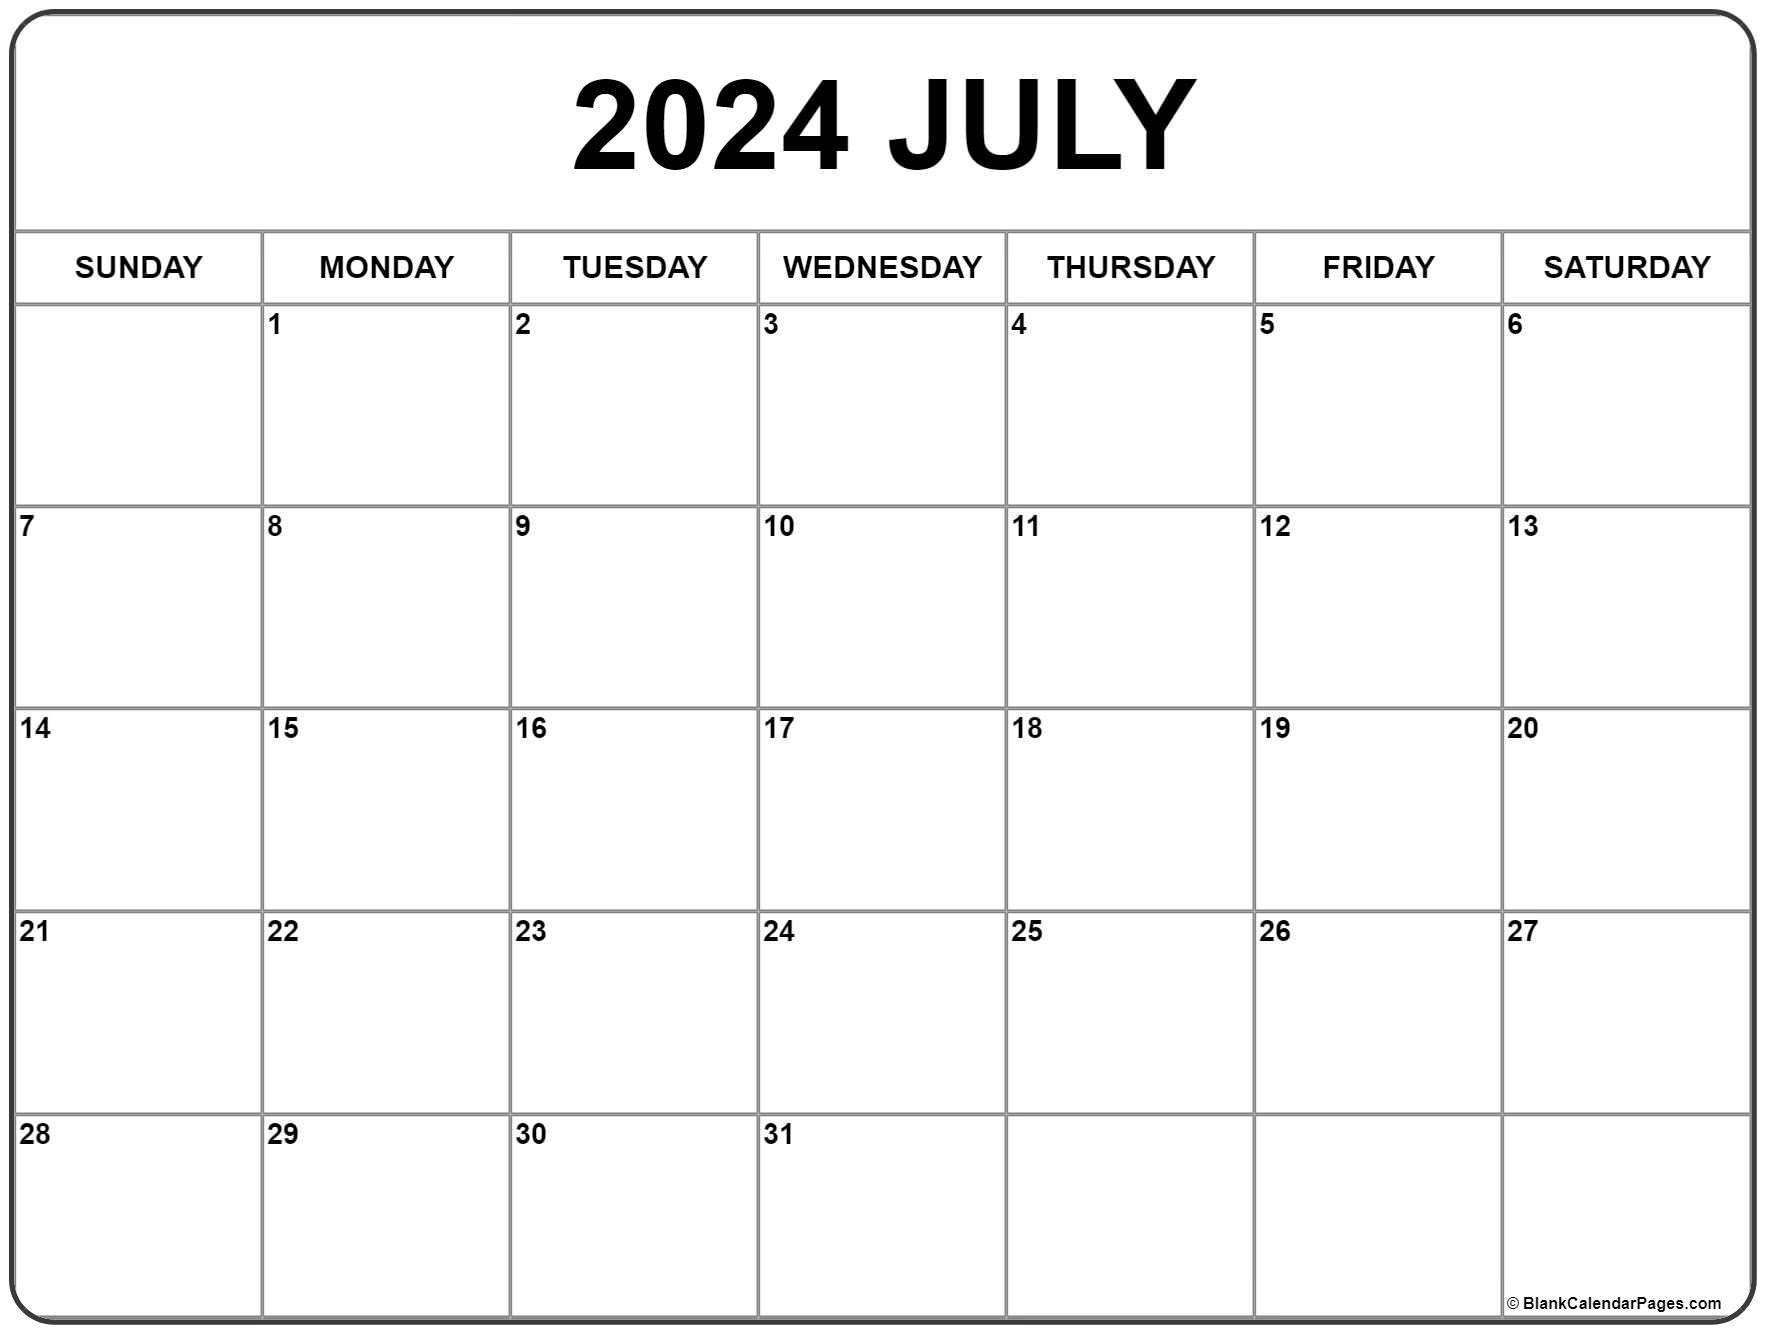 July 2024 Calendar | Free Printable Calendar pertaining to July 2024 Free Printable Calendar